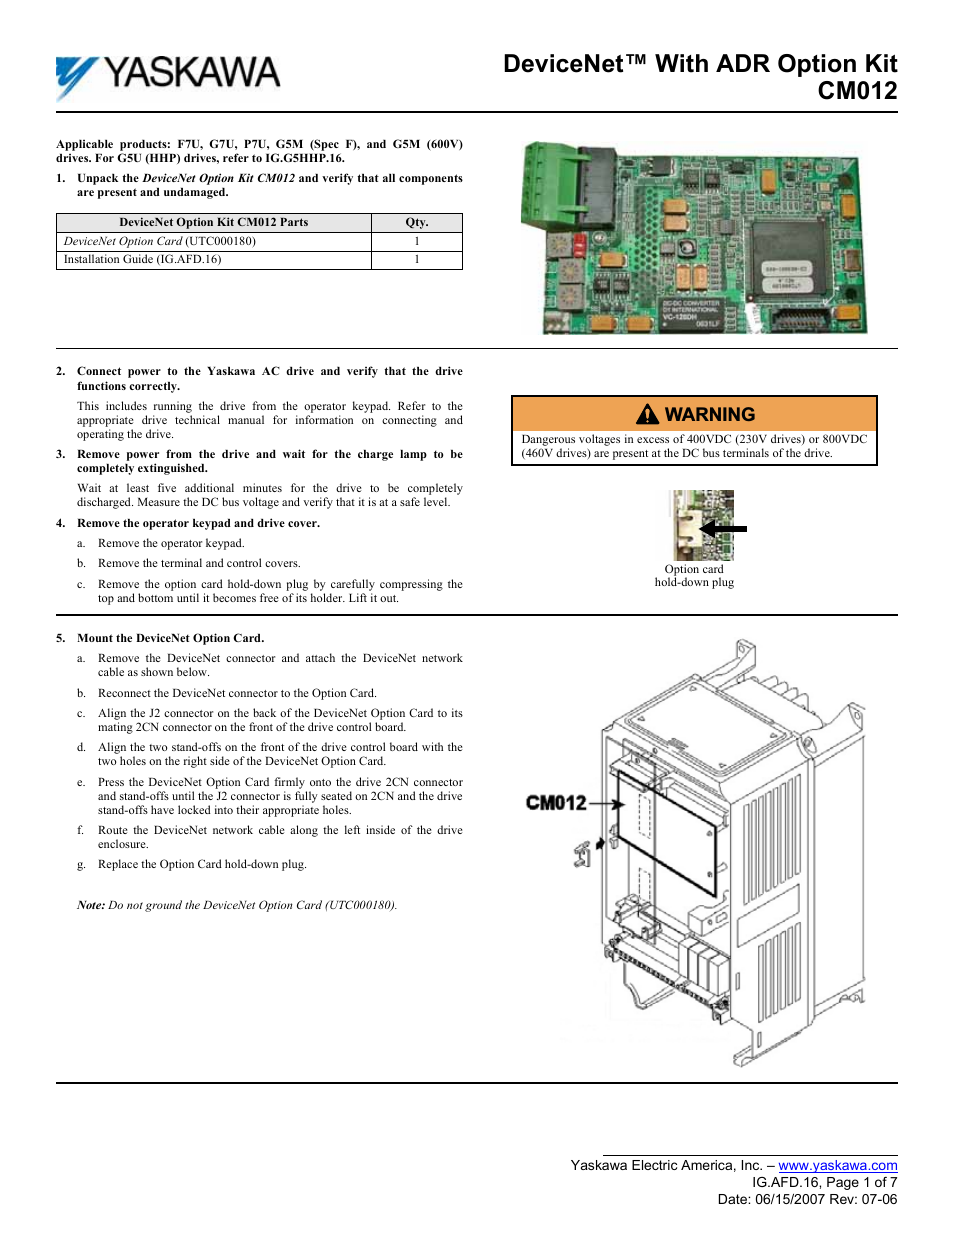 DeviceNet with ADR Option Kit CM012